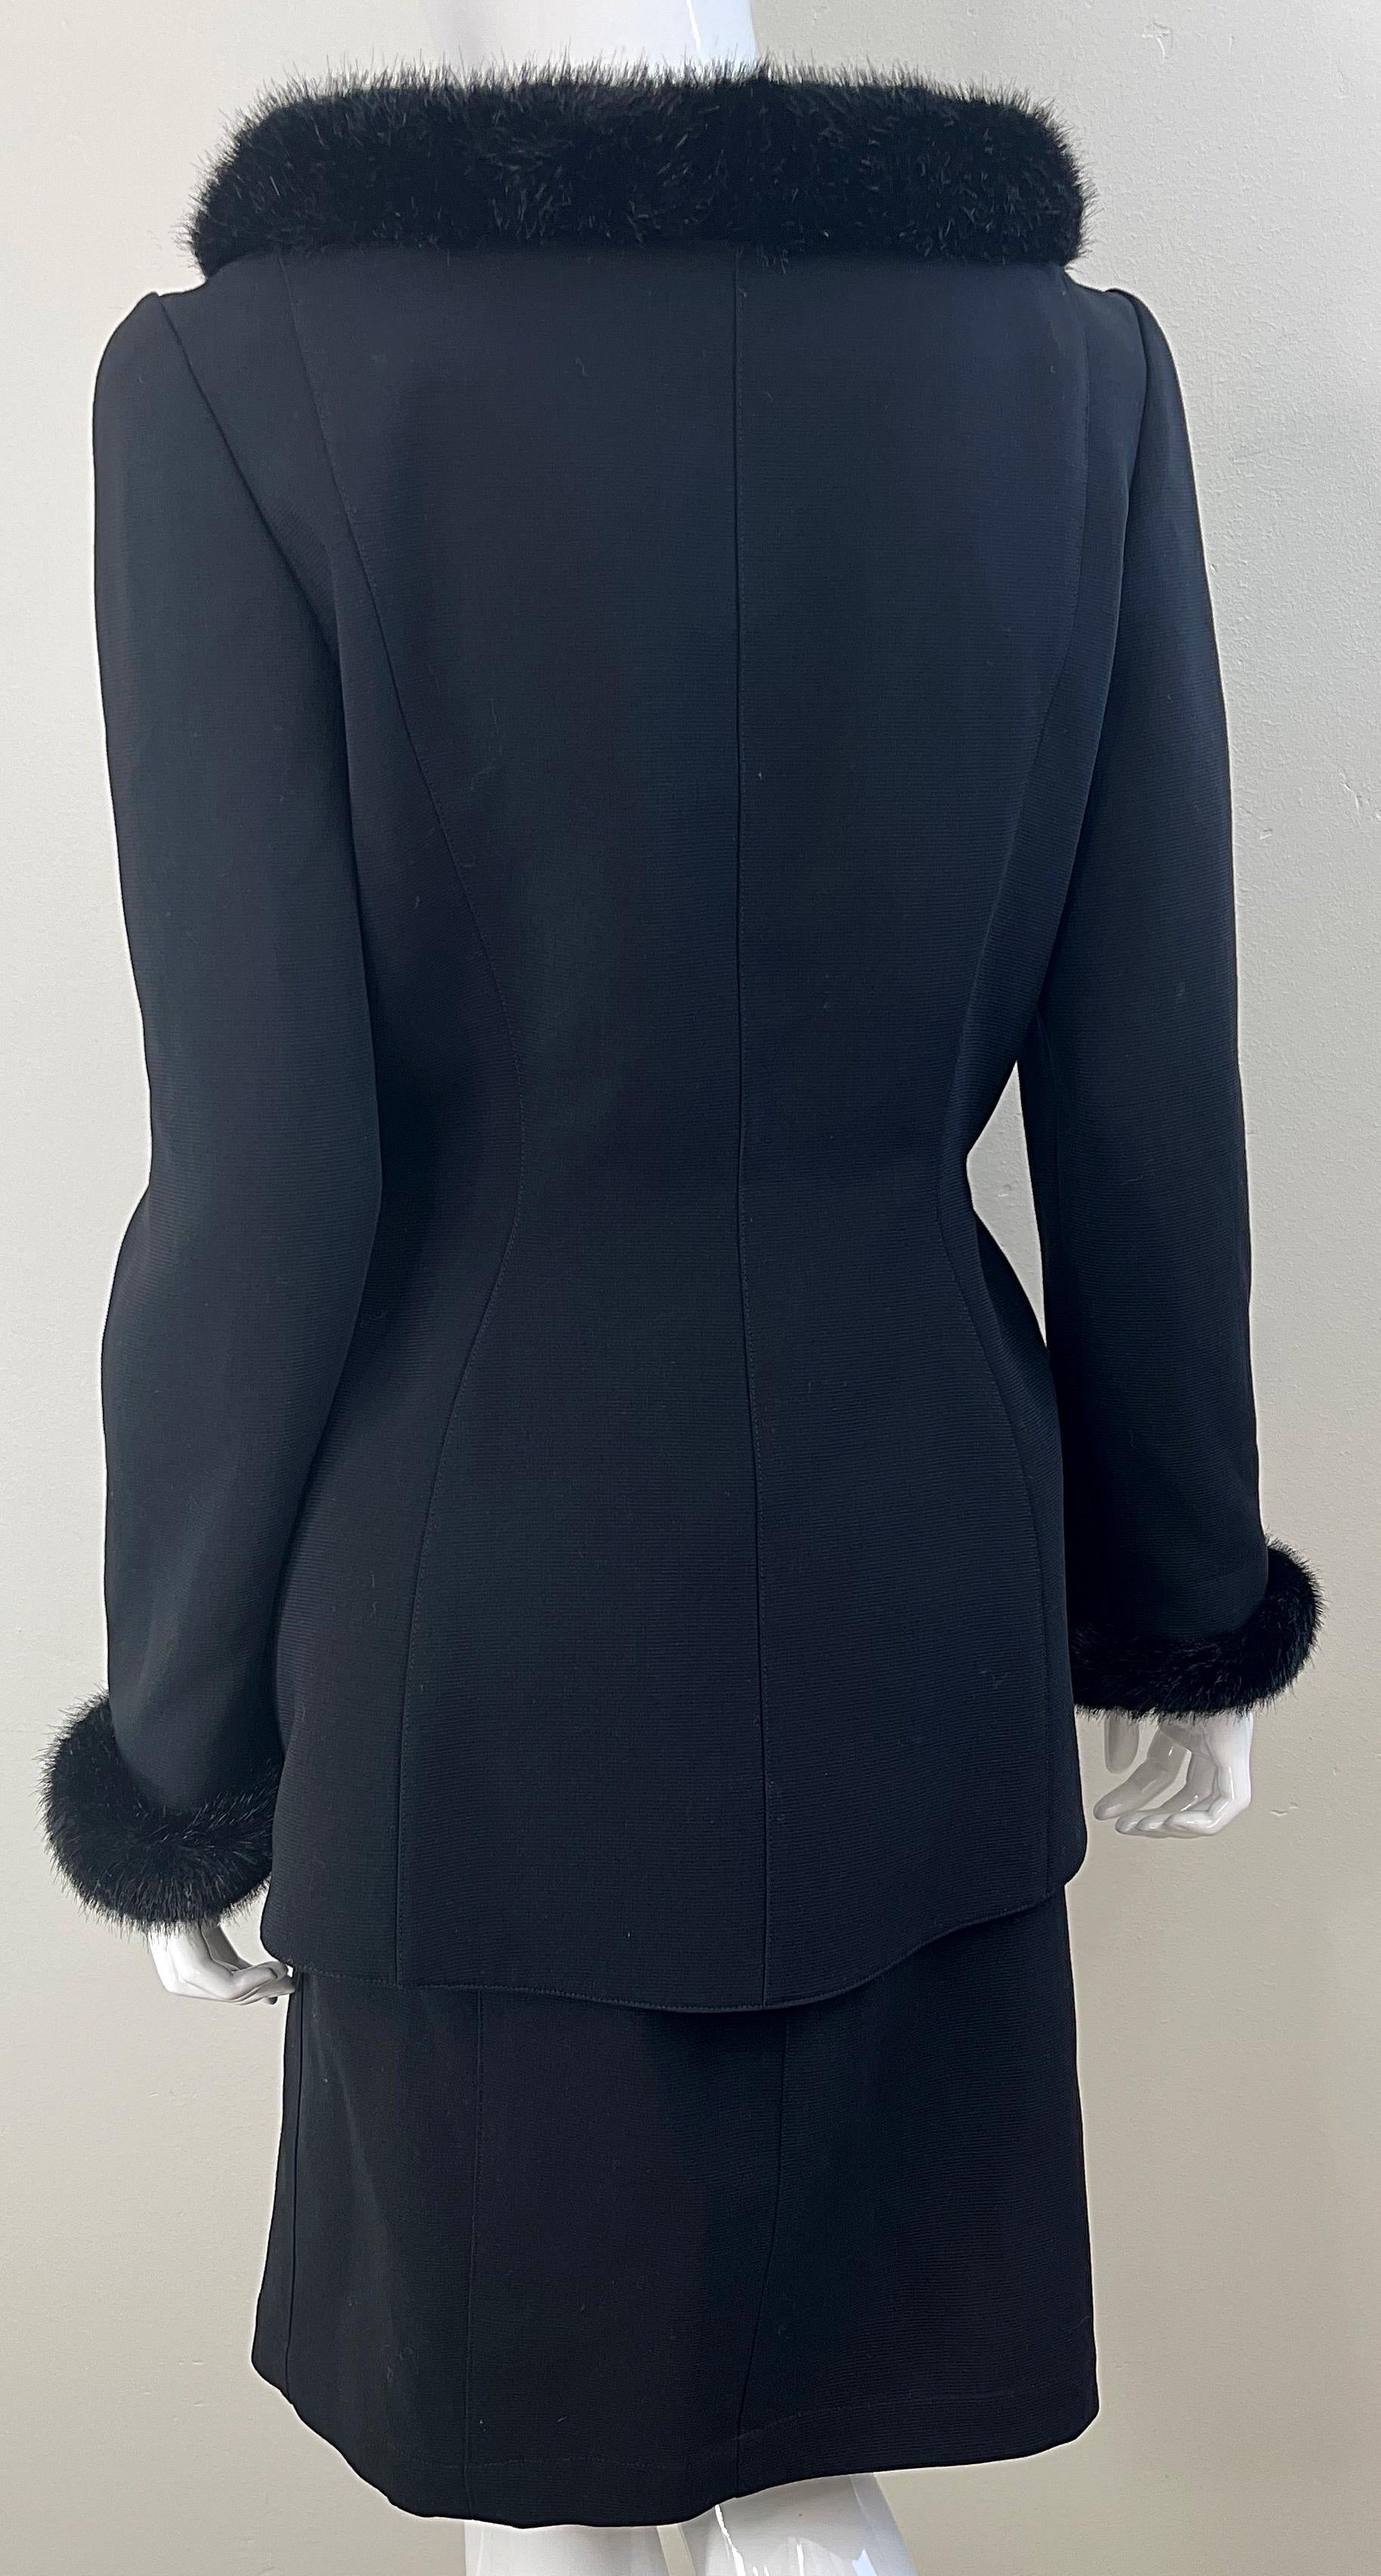 Thierry Mugler Fall 1991 Black Faux Fur Trim Size 40 / 6 Vintage 90 Skirt Suit For Sale 10